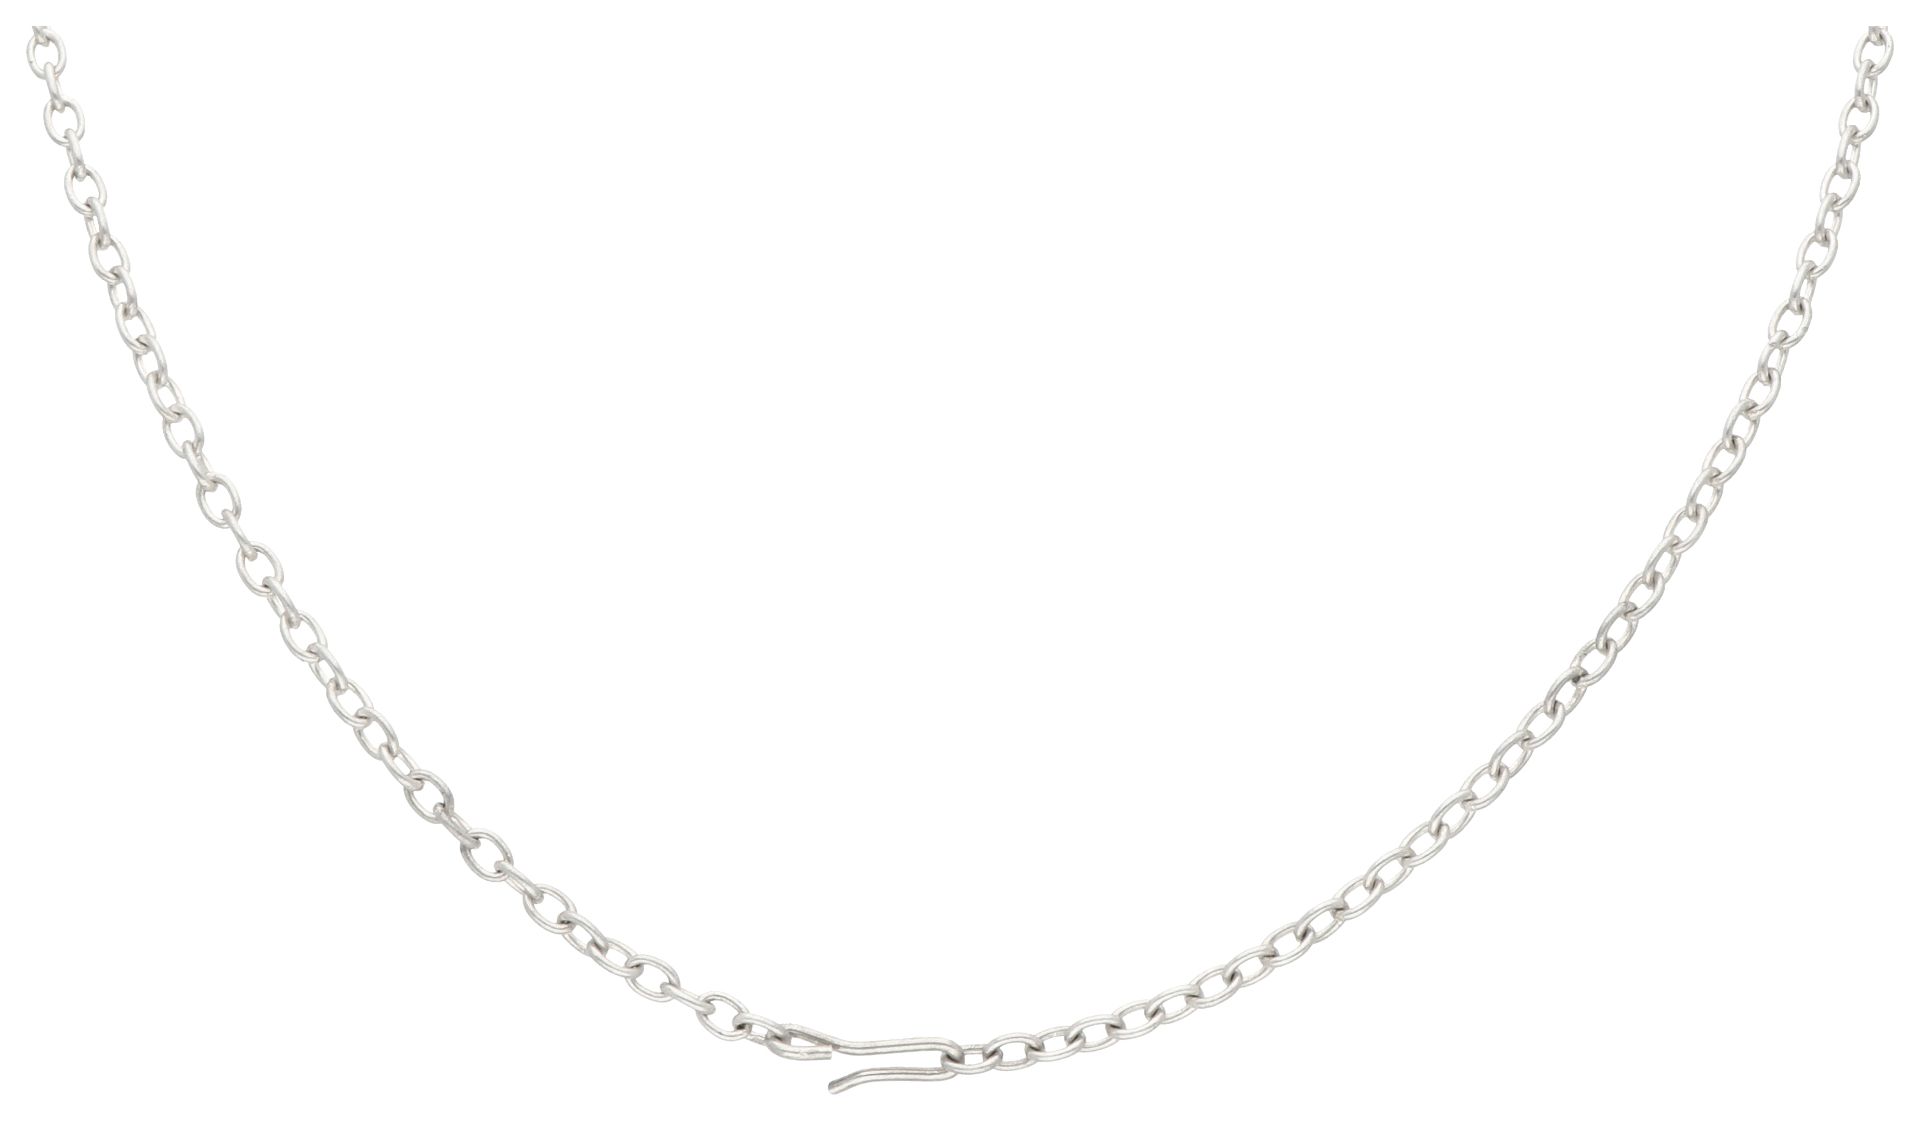 No Reserve - 1970s Turun Hopea silver necklace with pendant designed by Jorma Laine. - Bild 3 aus 5